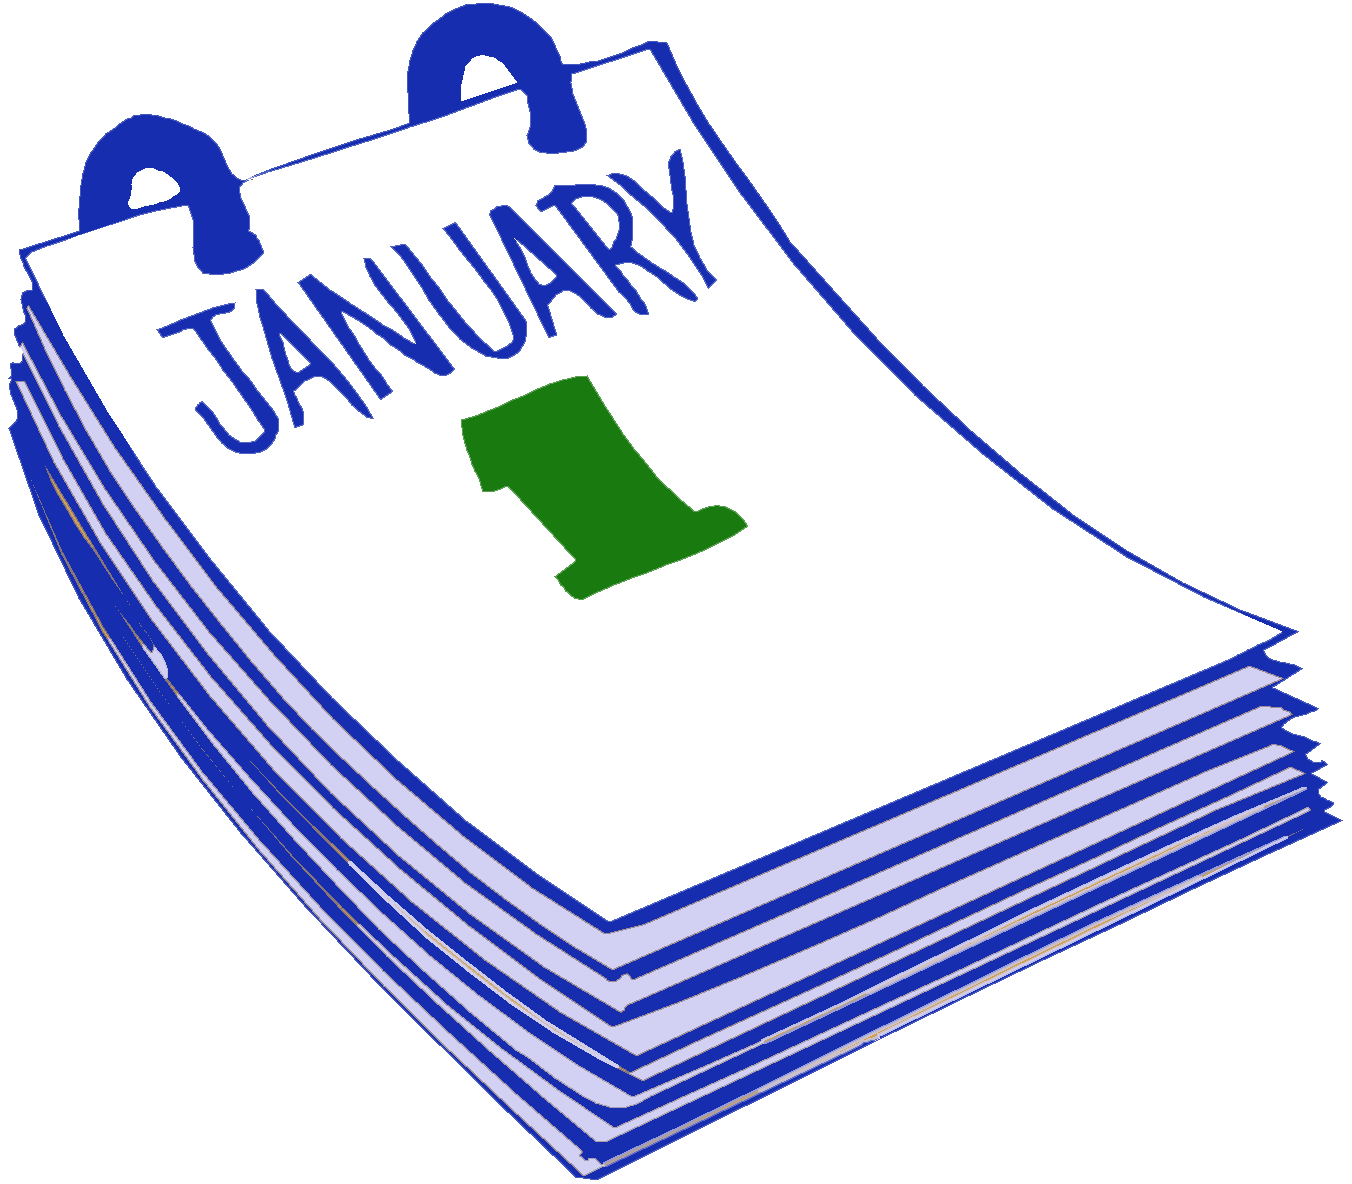 January 1 Calendar drawing free image download